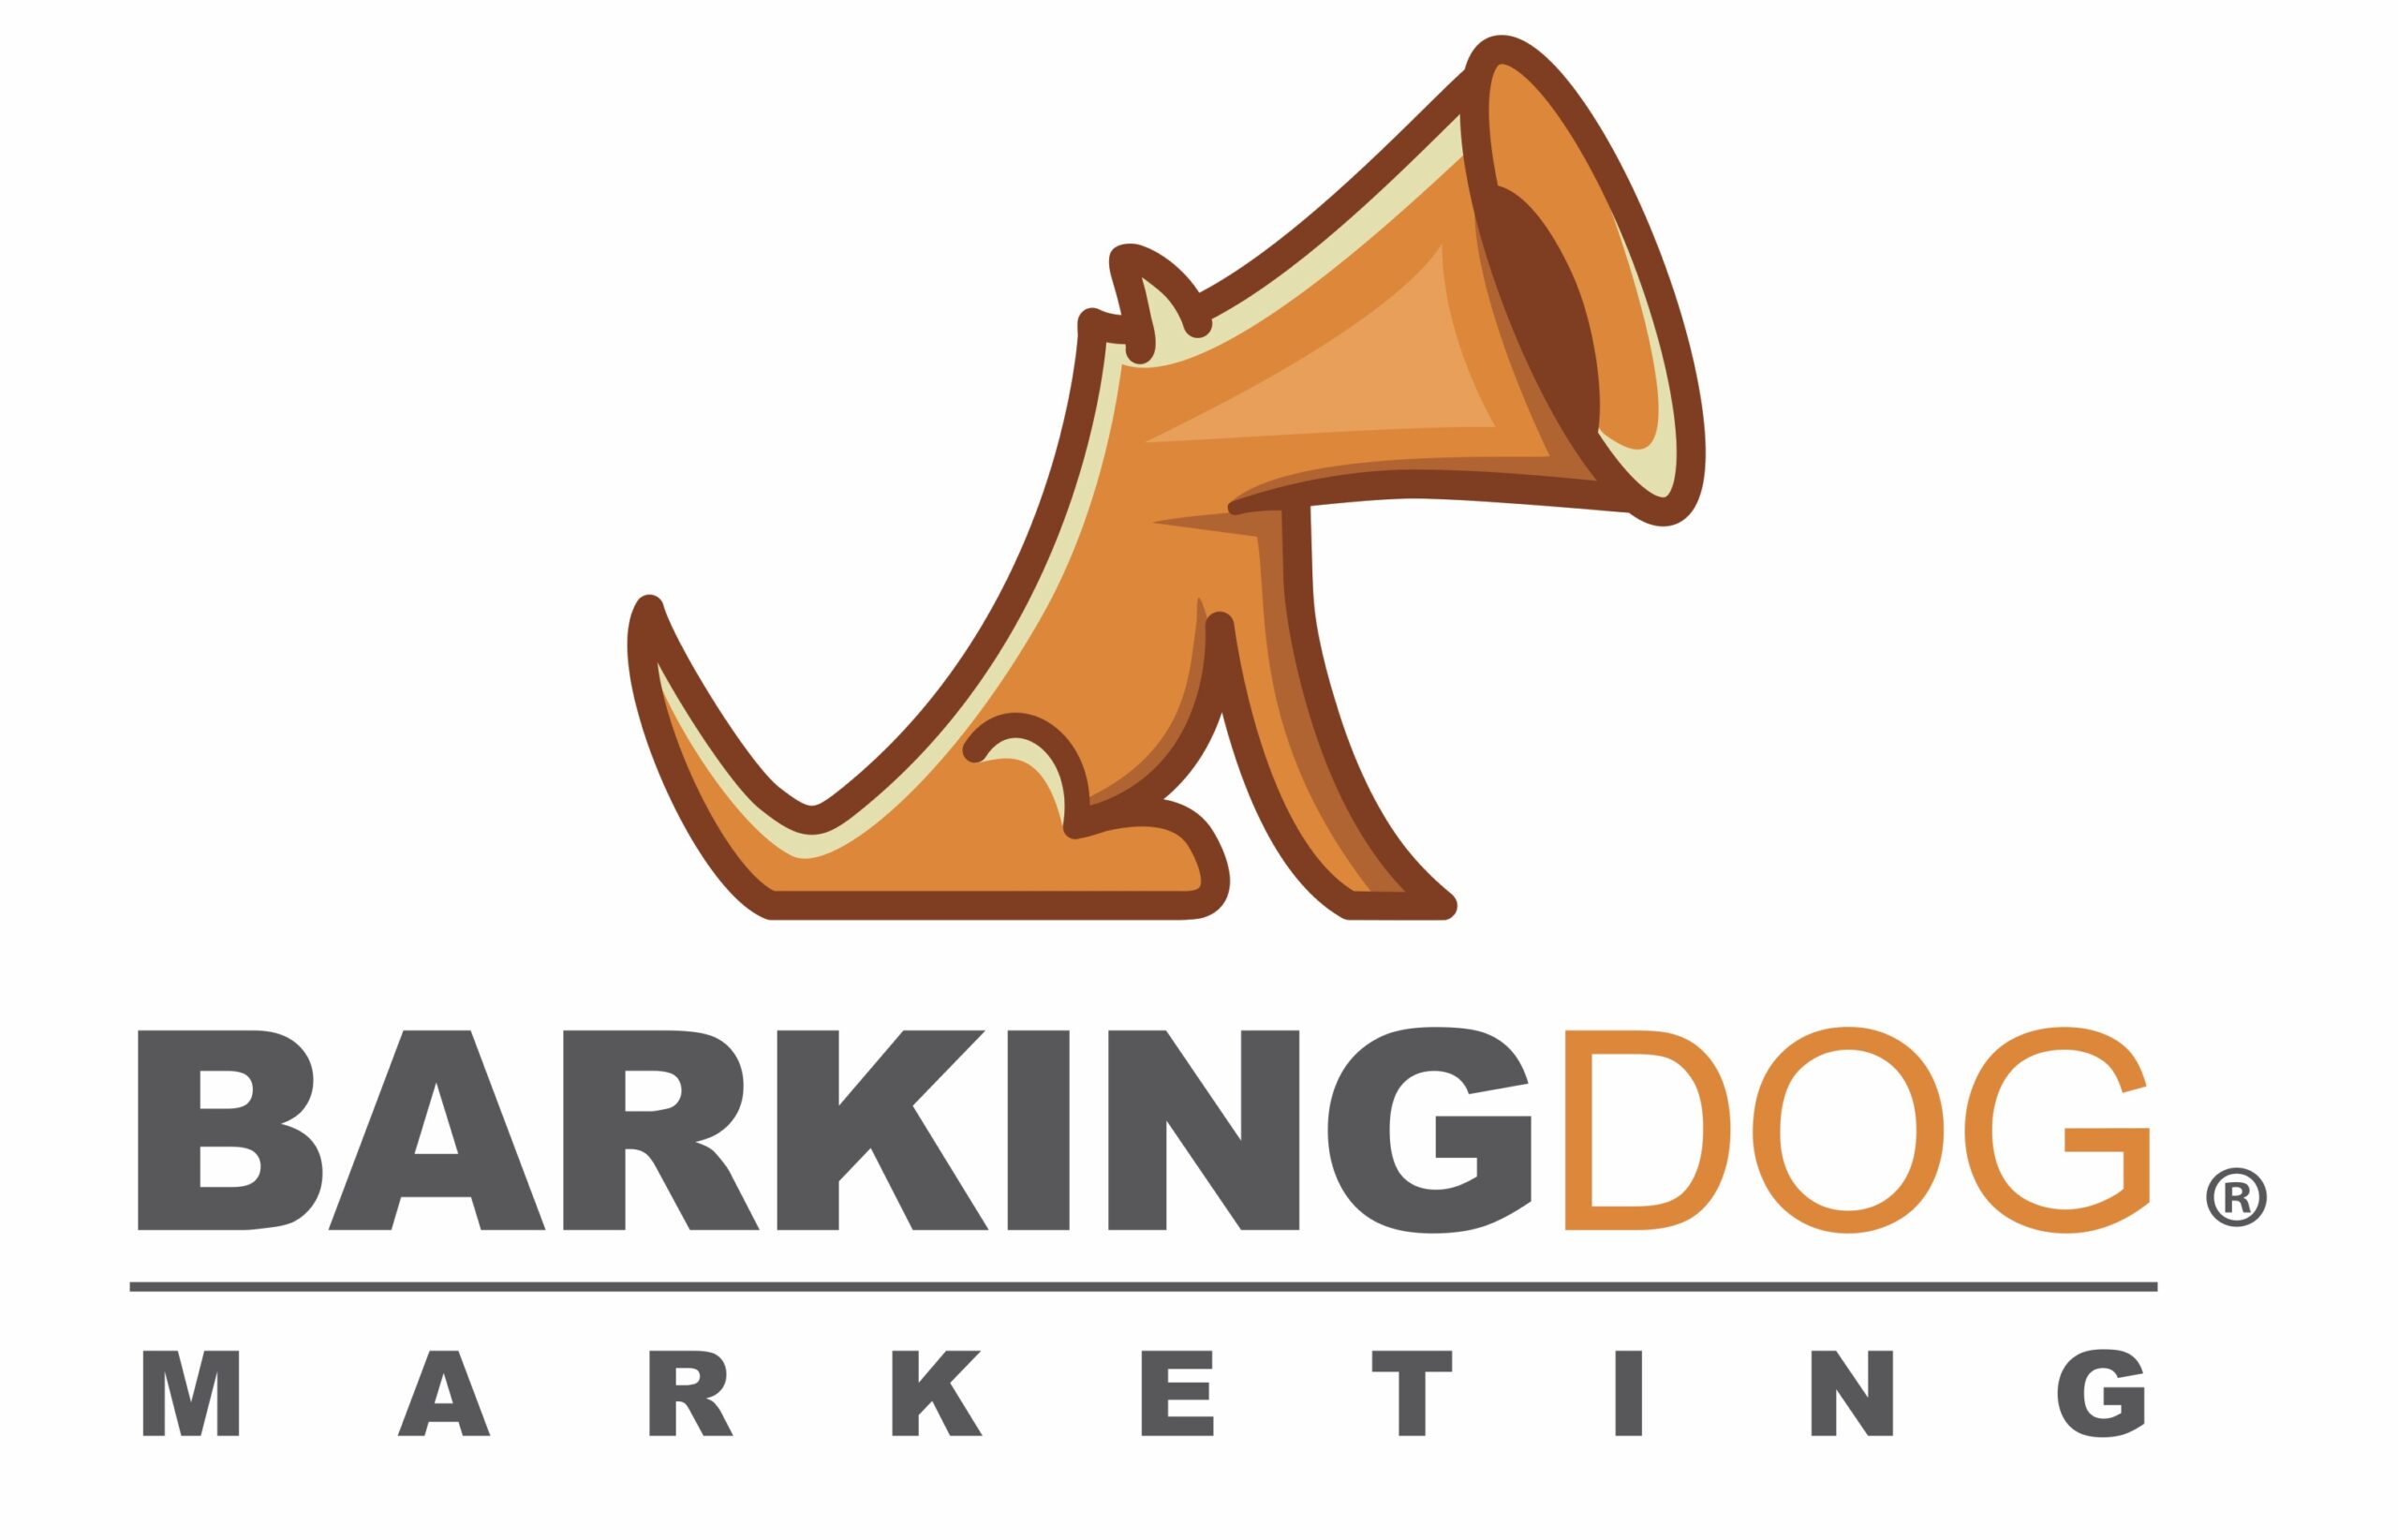 Barking Dog Marketing